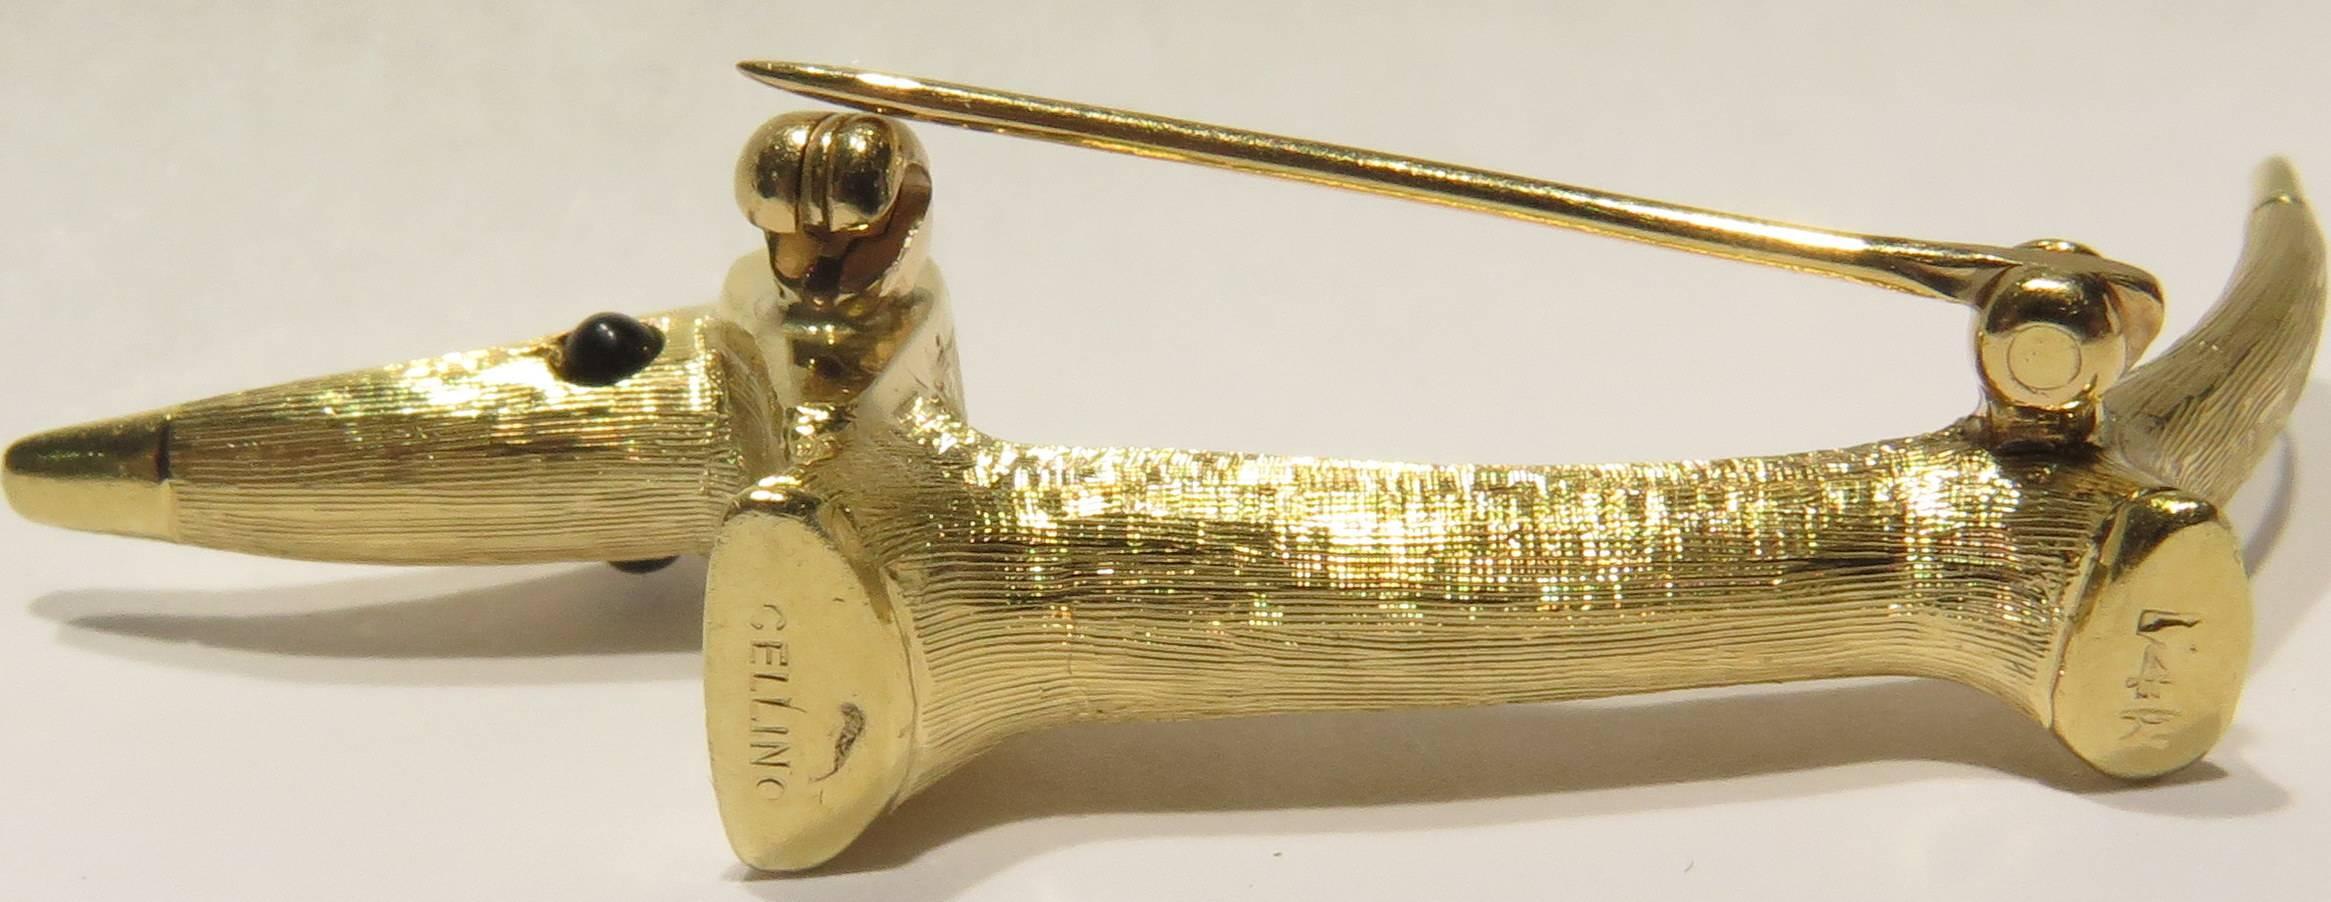 Cellino Onyx Gold Thick Textured Stylized Dachshund Dog Pin 2